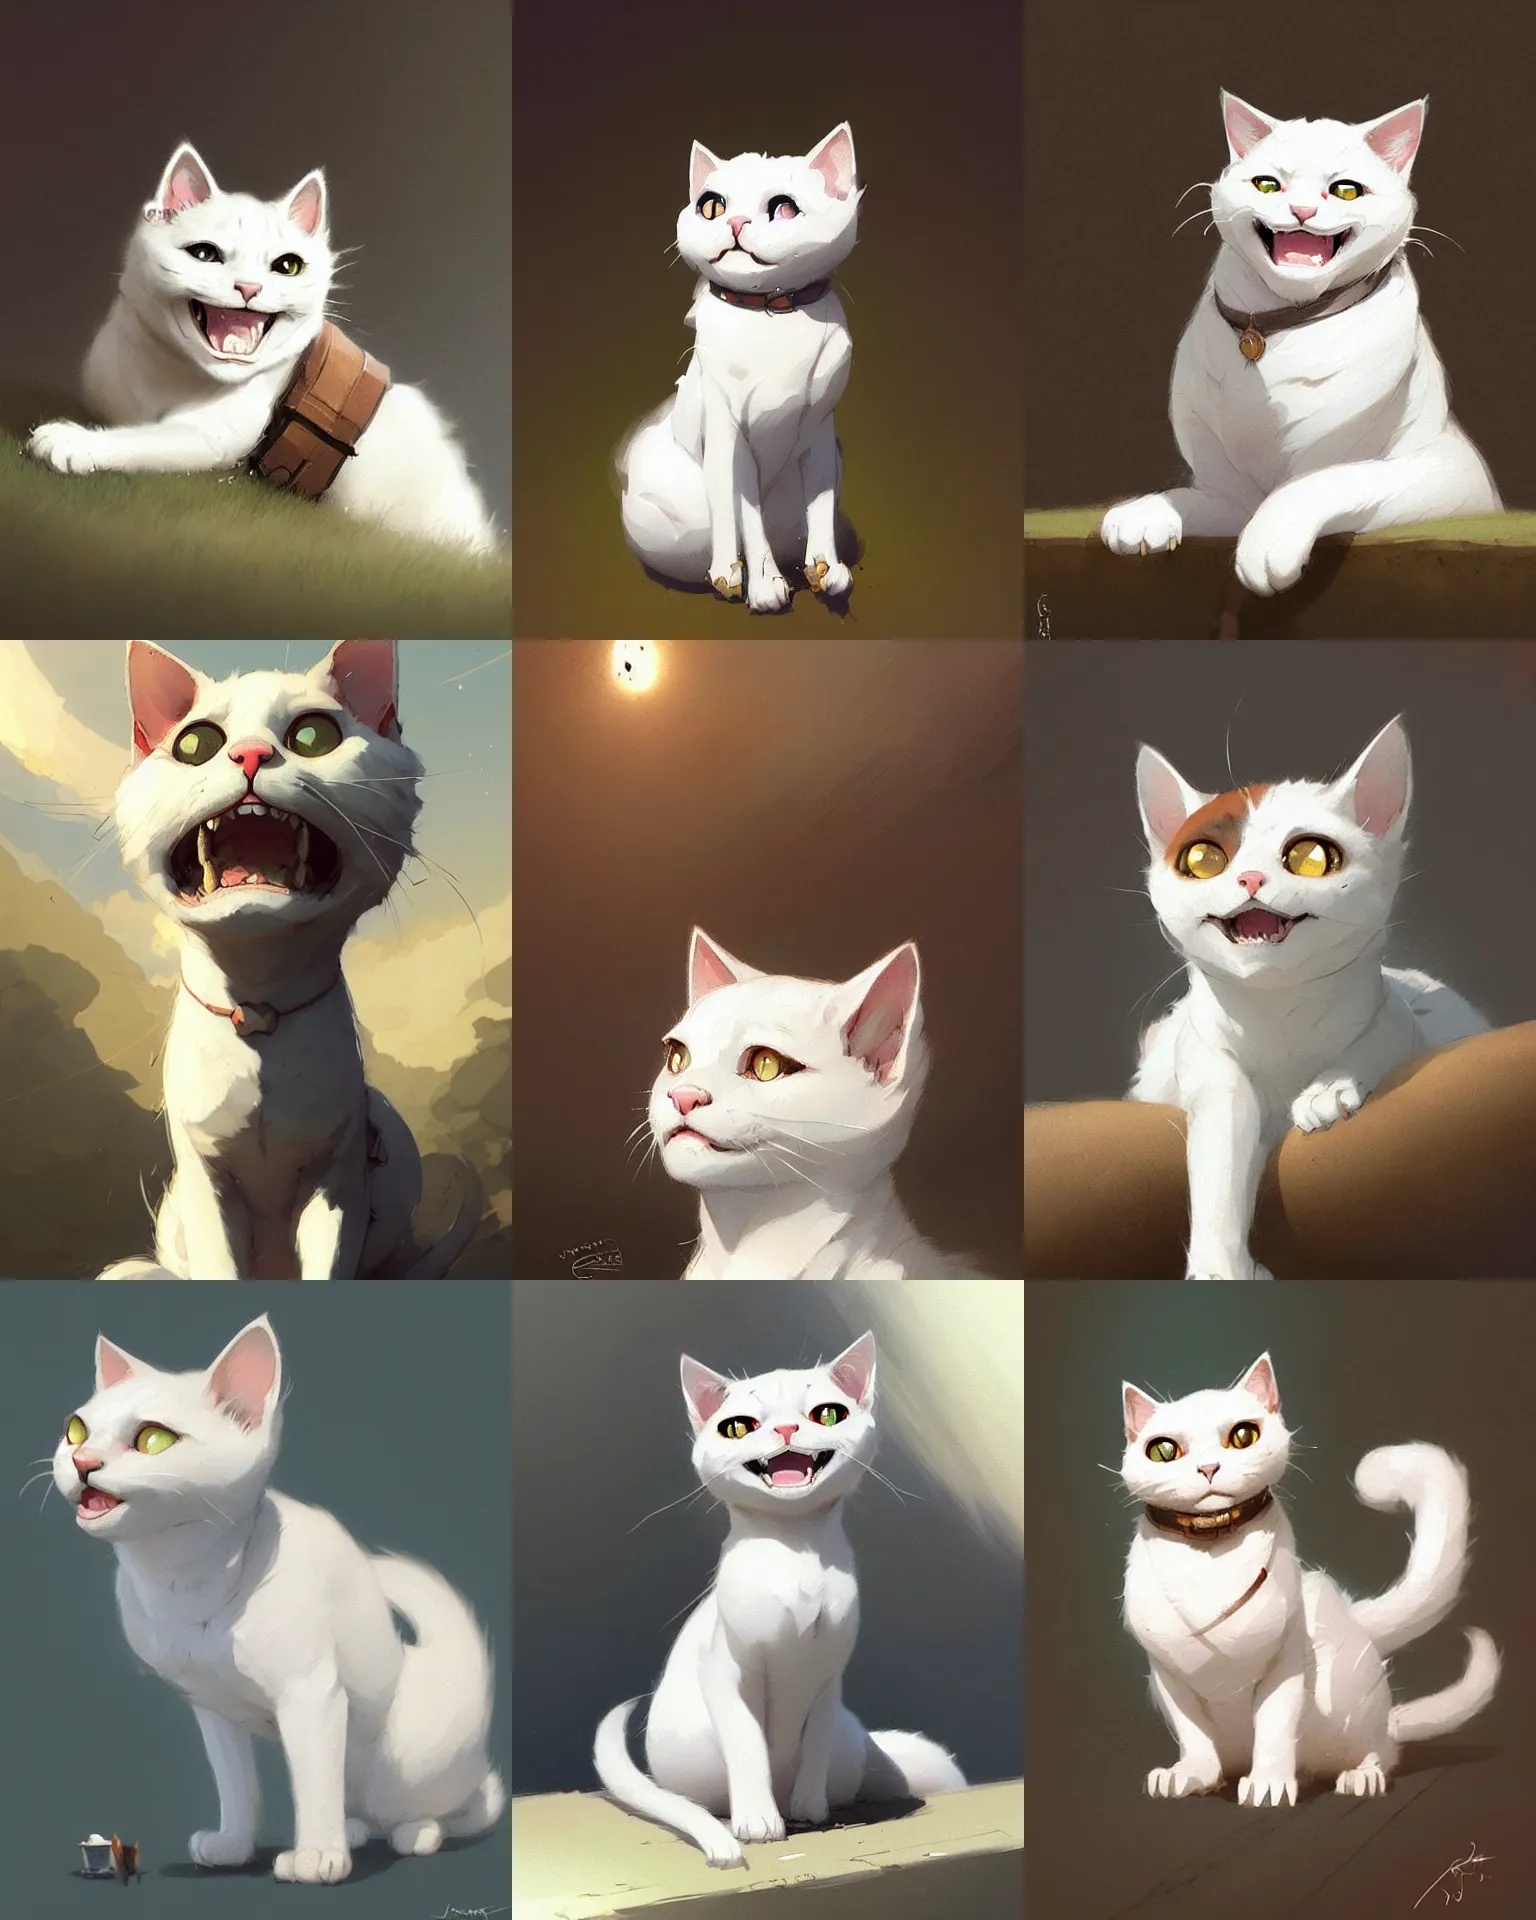 Prompt: A cute white cat with brown spots smiling, details, sharp focus, illustration, by Jordan Grimmer and greg rutkowski, Trending artstation, pixiv, digital Art